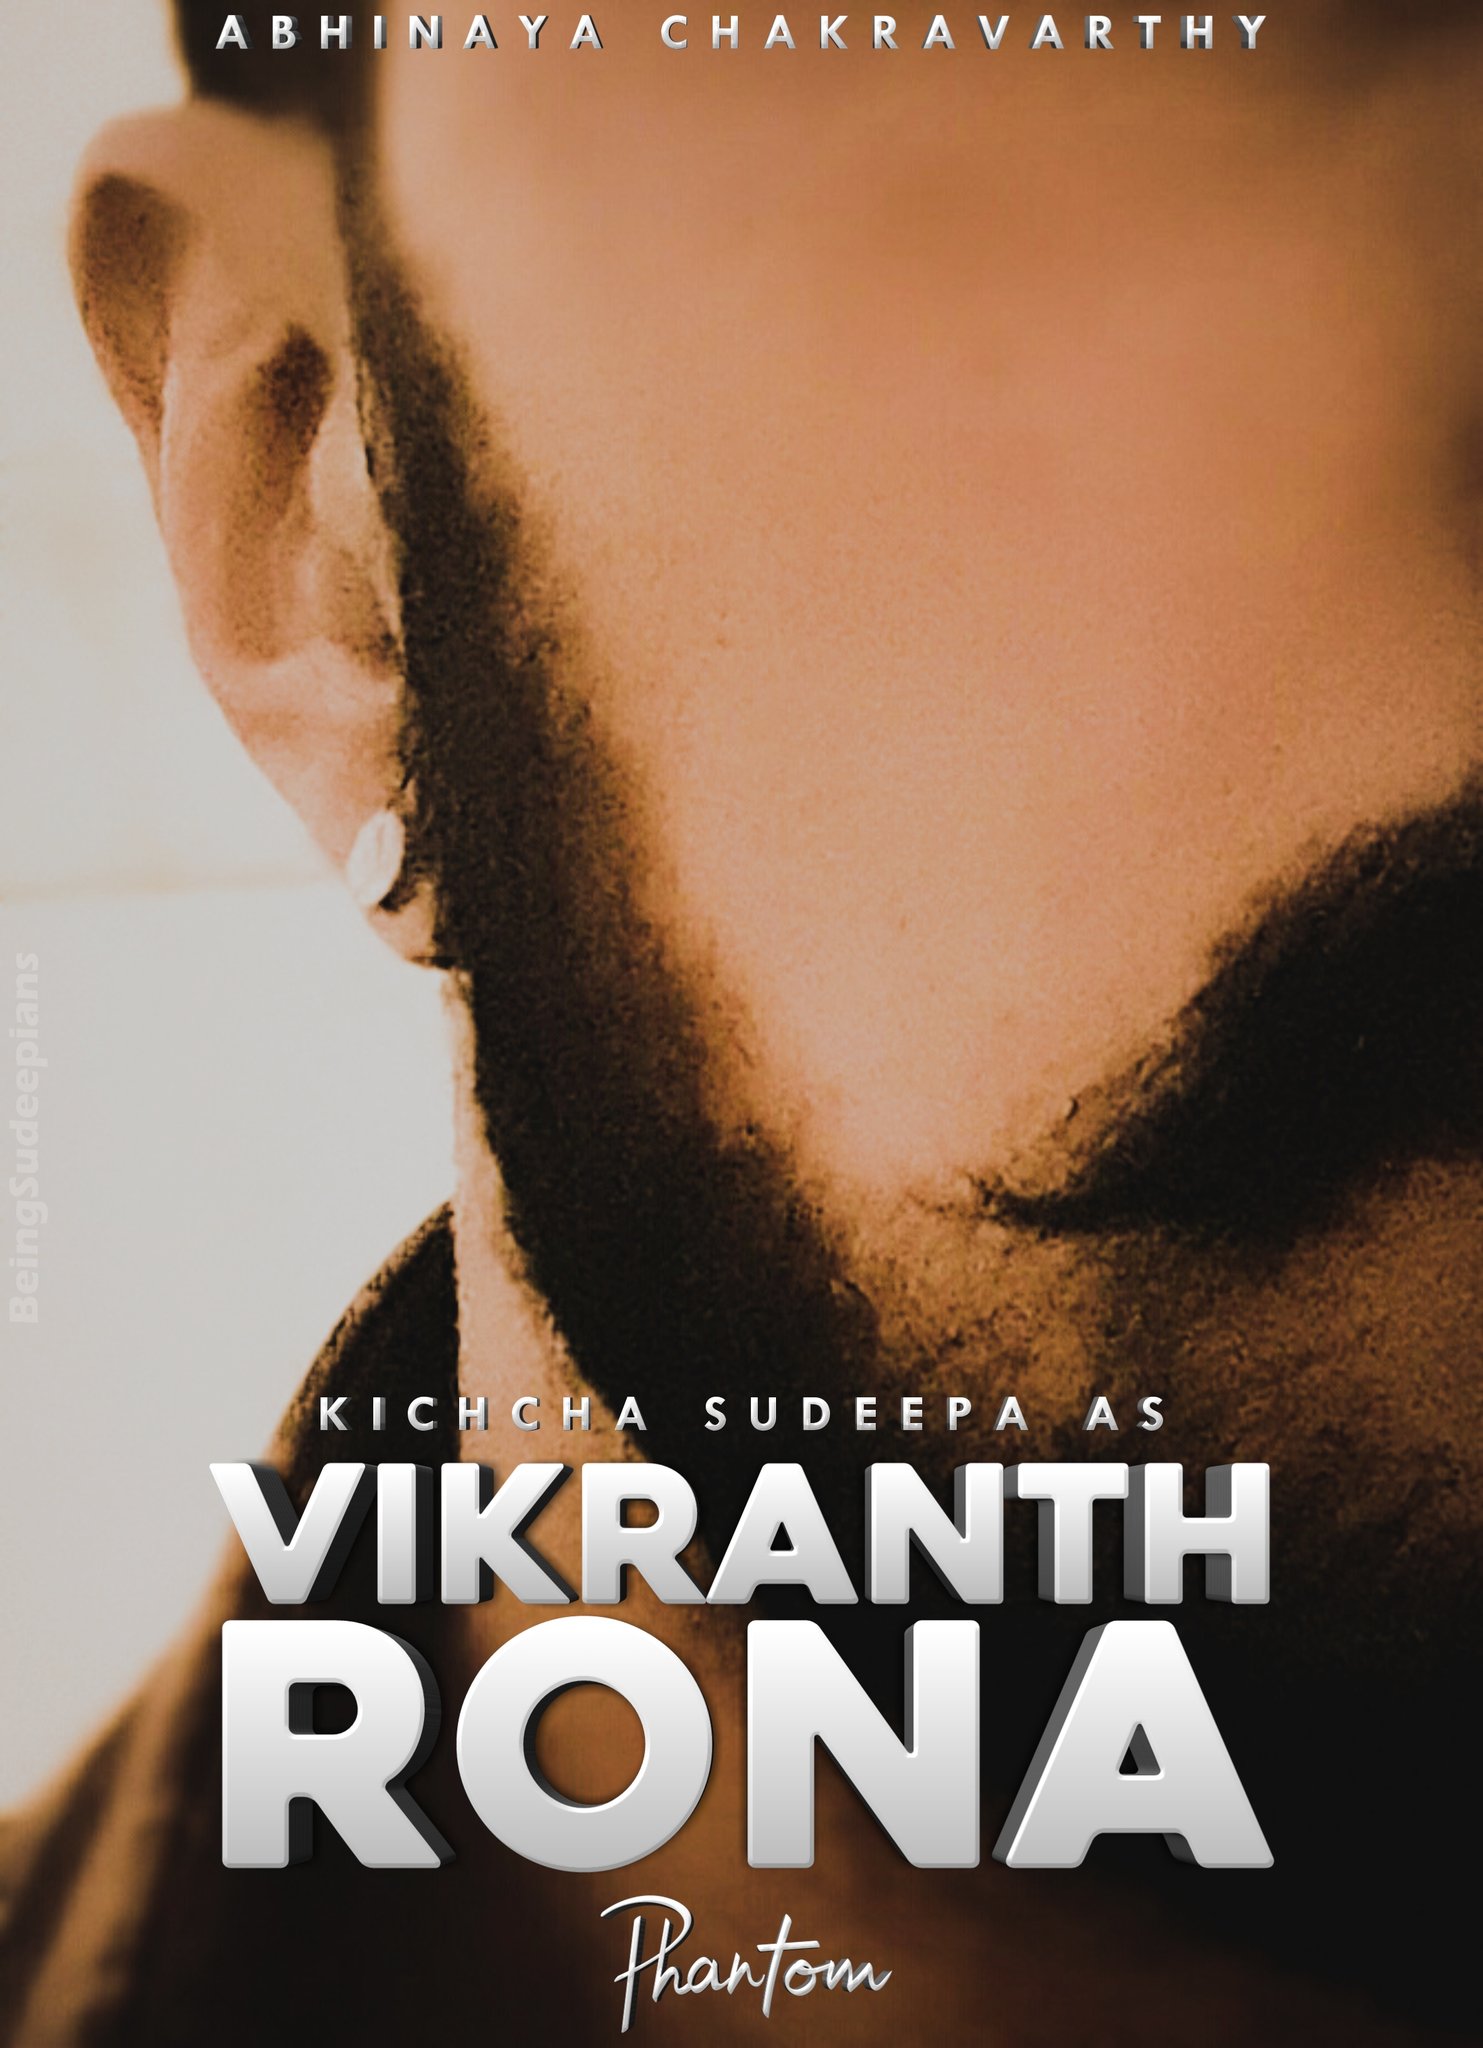 Vikrant Rona   Vikrant Rona updated their cover photo